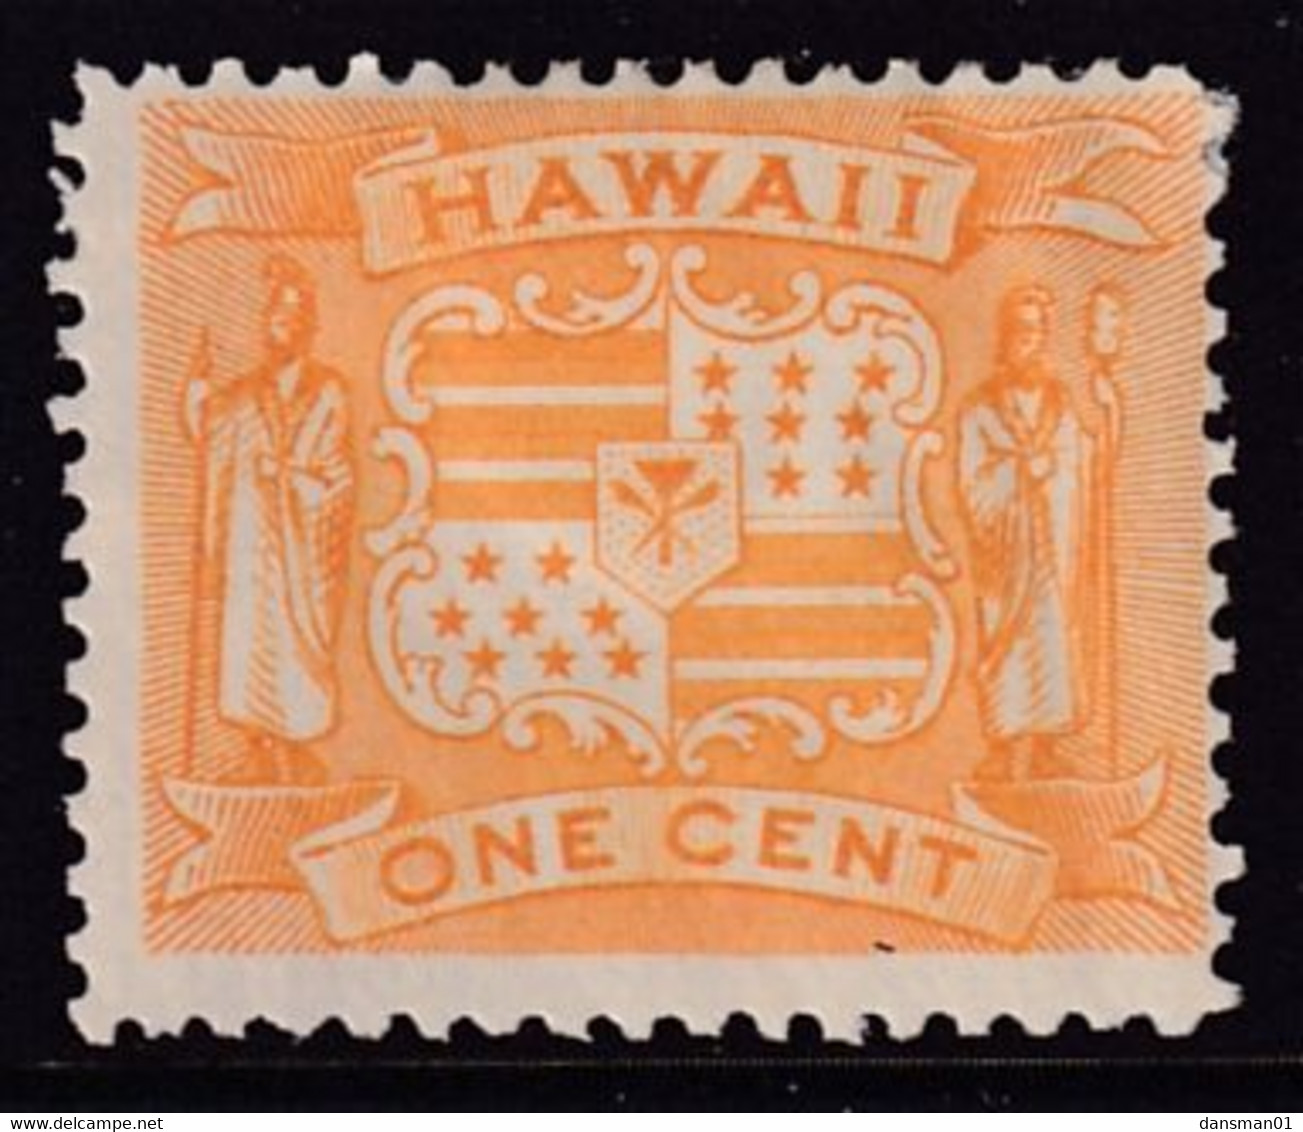 HAWAII 1894 Pictorial Sc 74 Mint Hinged - Hawai